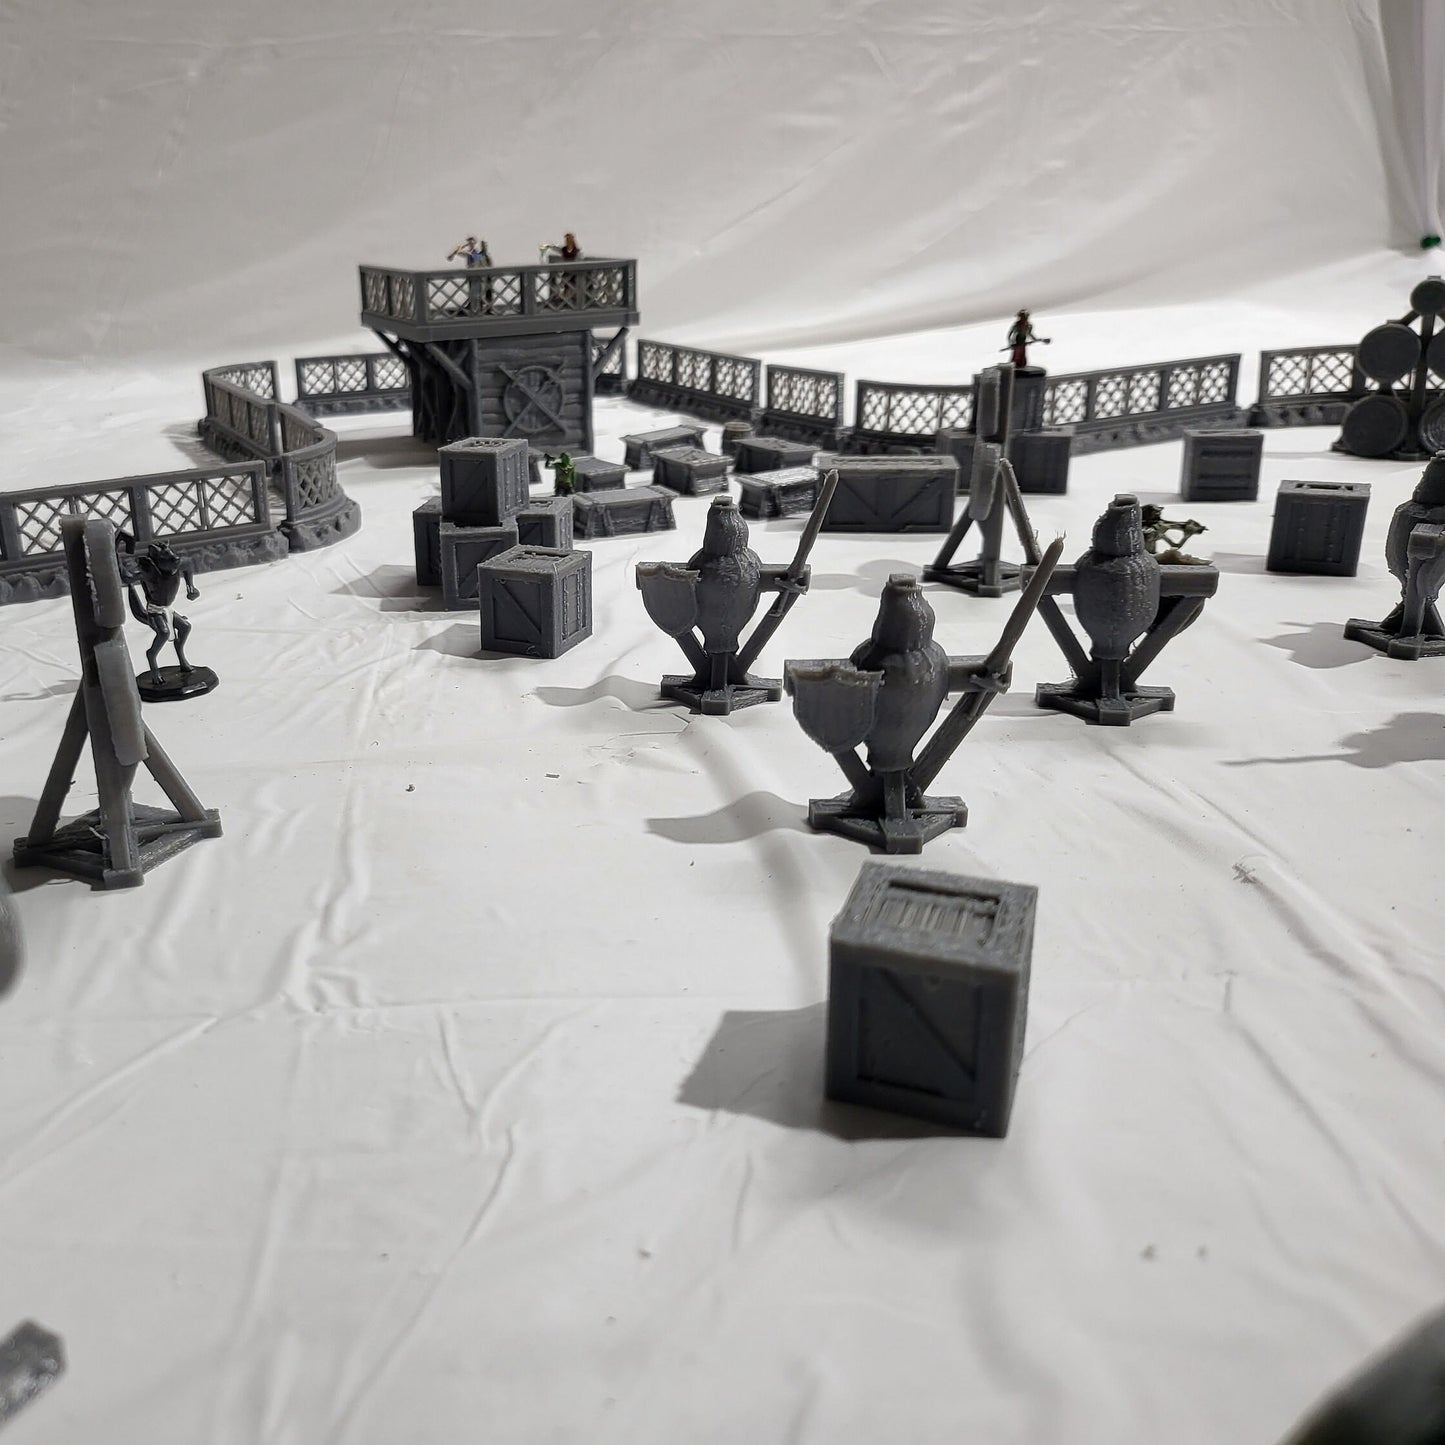 50+ Pieces -Training Yard Set - 28mm scale - Warhammer - Dungeons and Dragons - 28mm Terrain - warhammer terrain